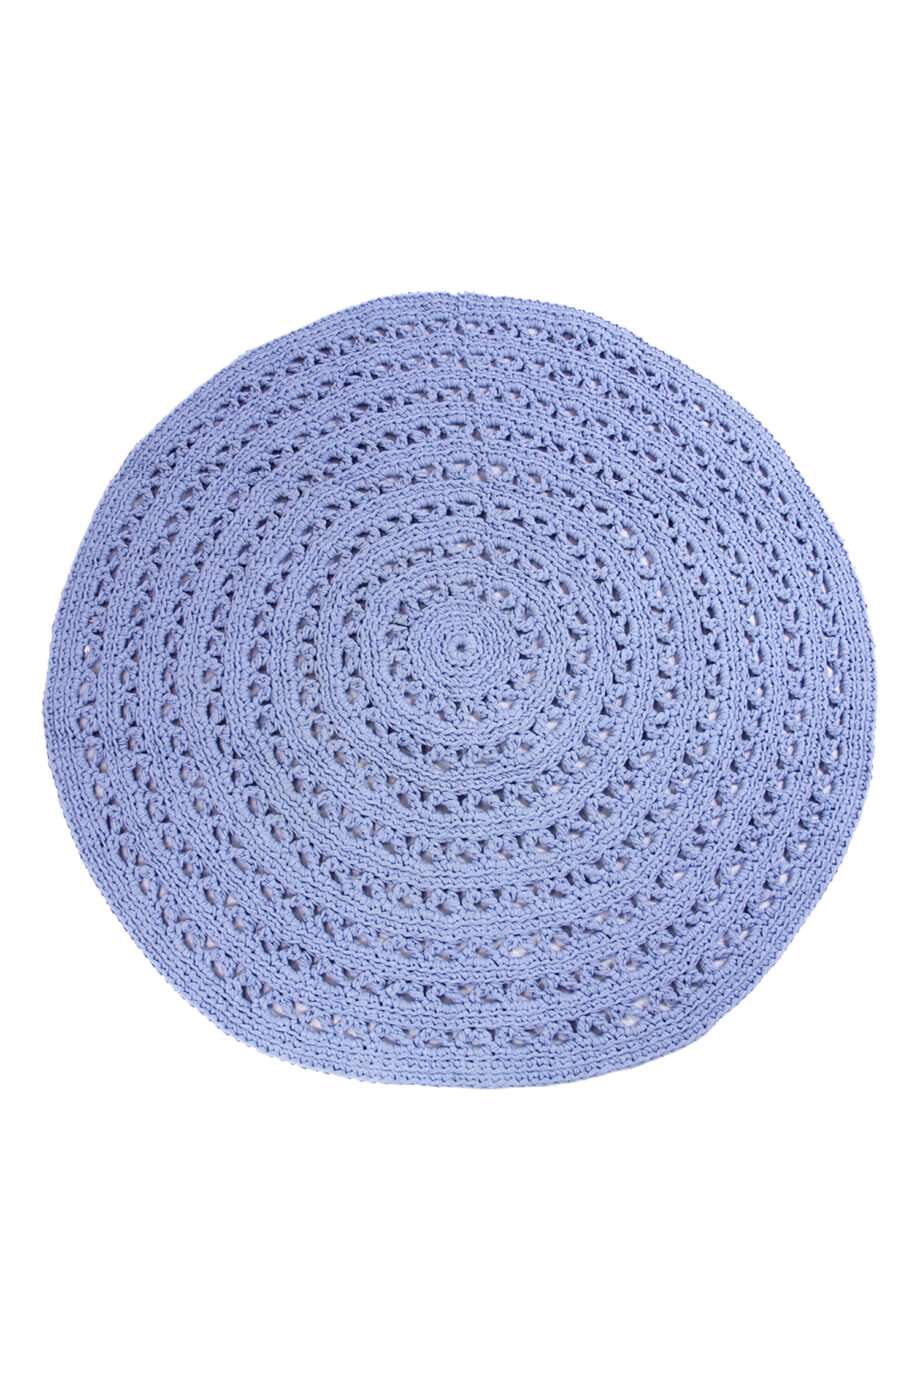 arab jeans blue crochet cotton rug xlarge